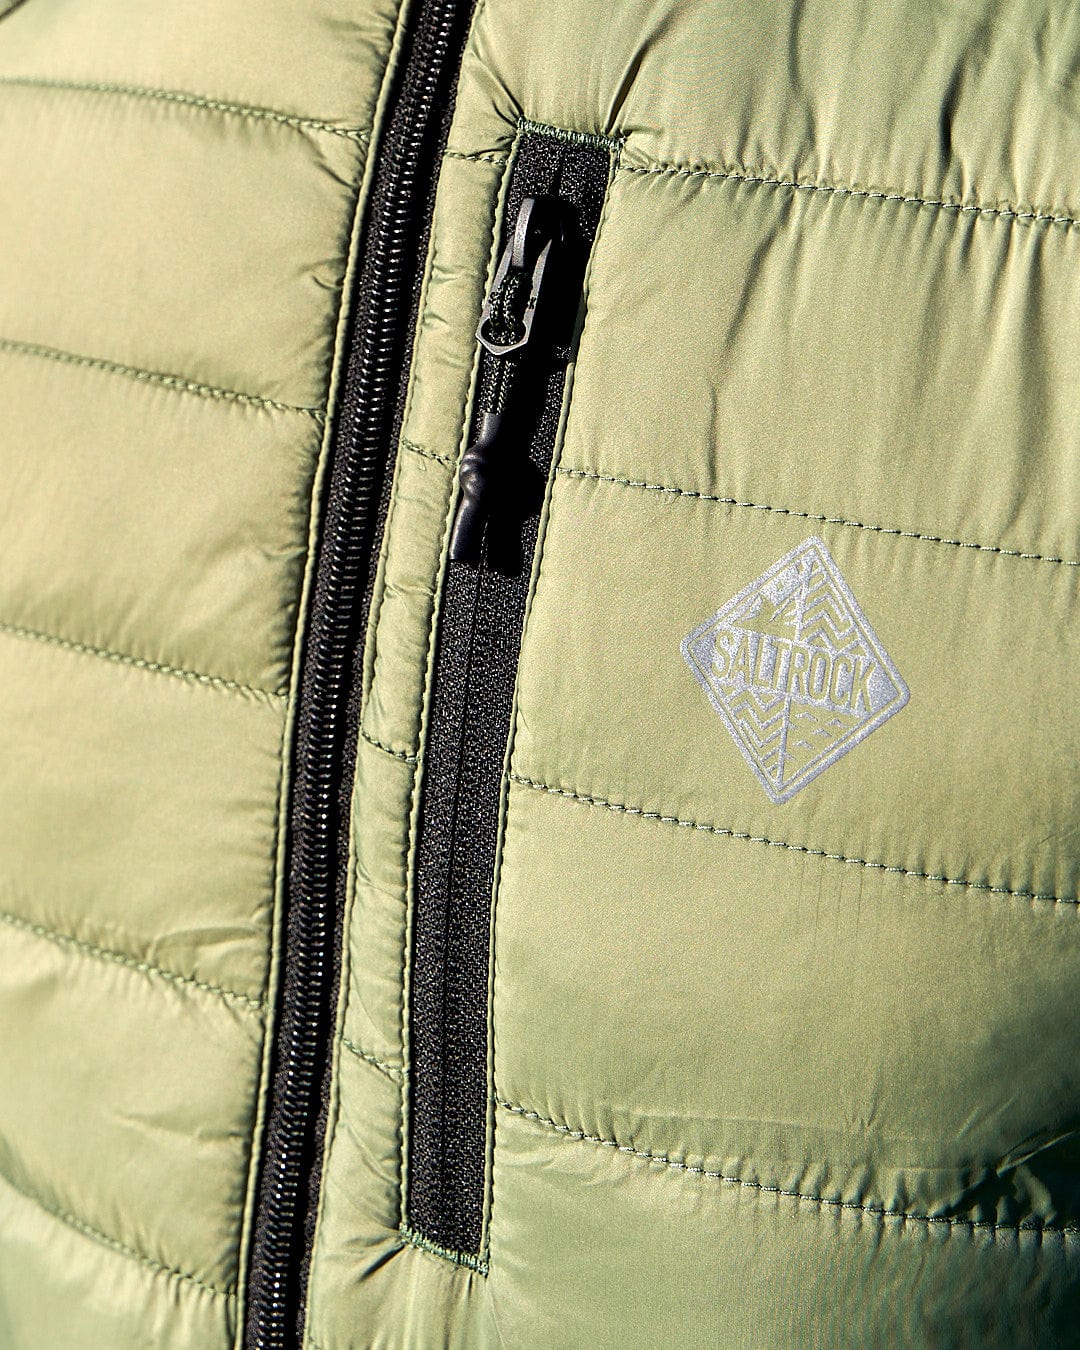 A close up of the zipper of a Saltrock Scott - Mens Reversible Gilet - Dark Green/Black puffy jacket.